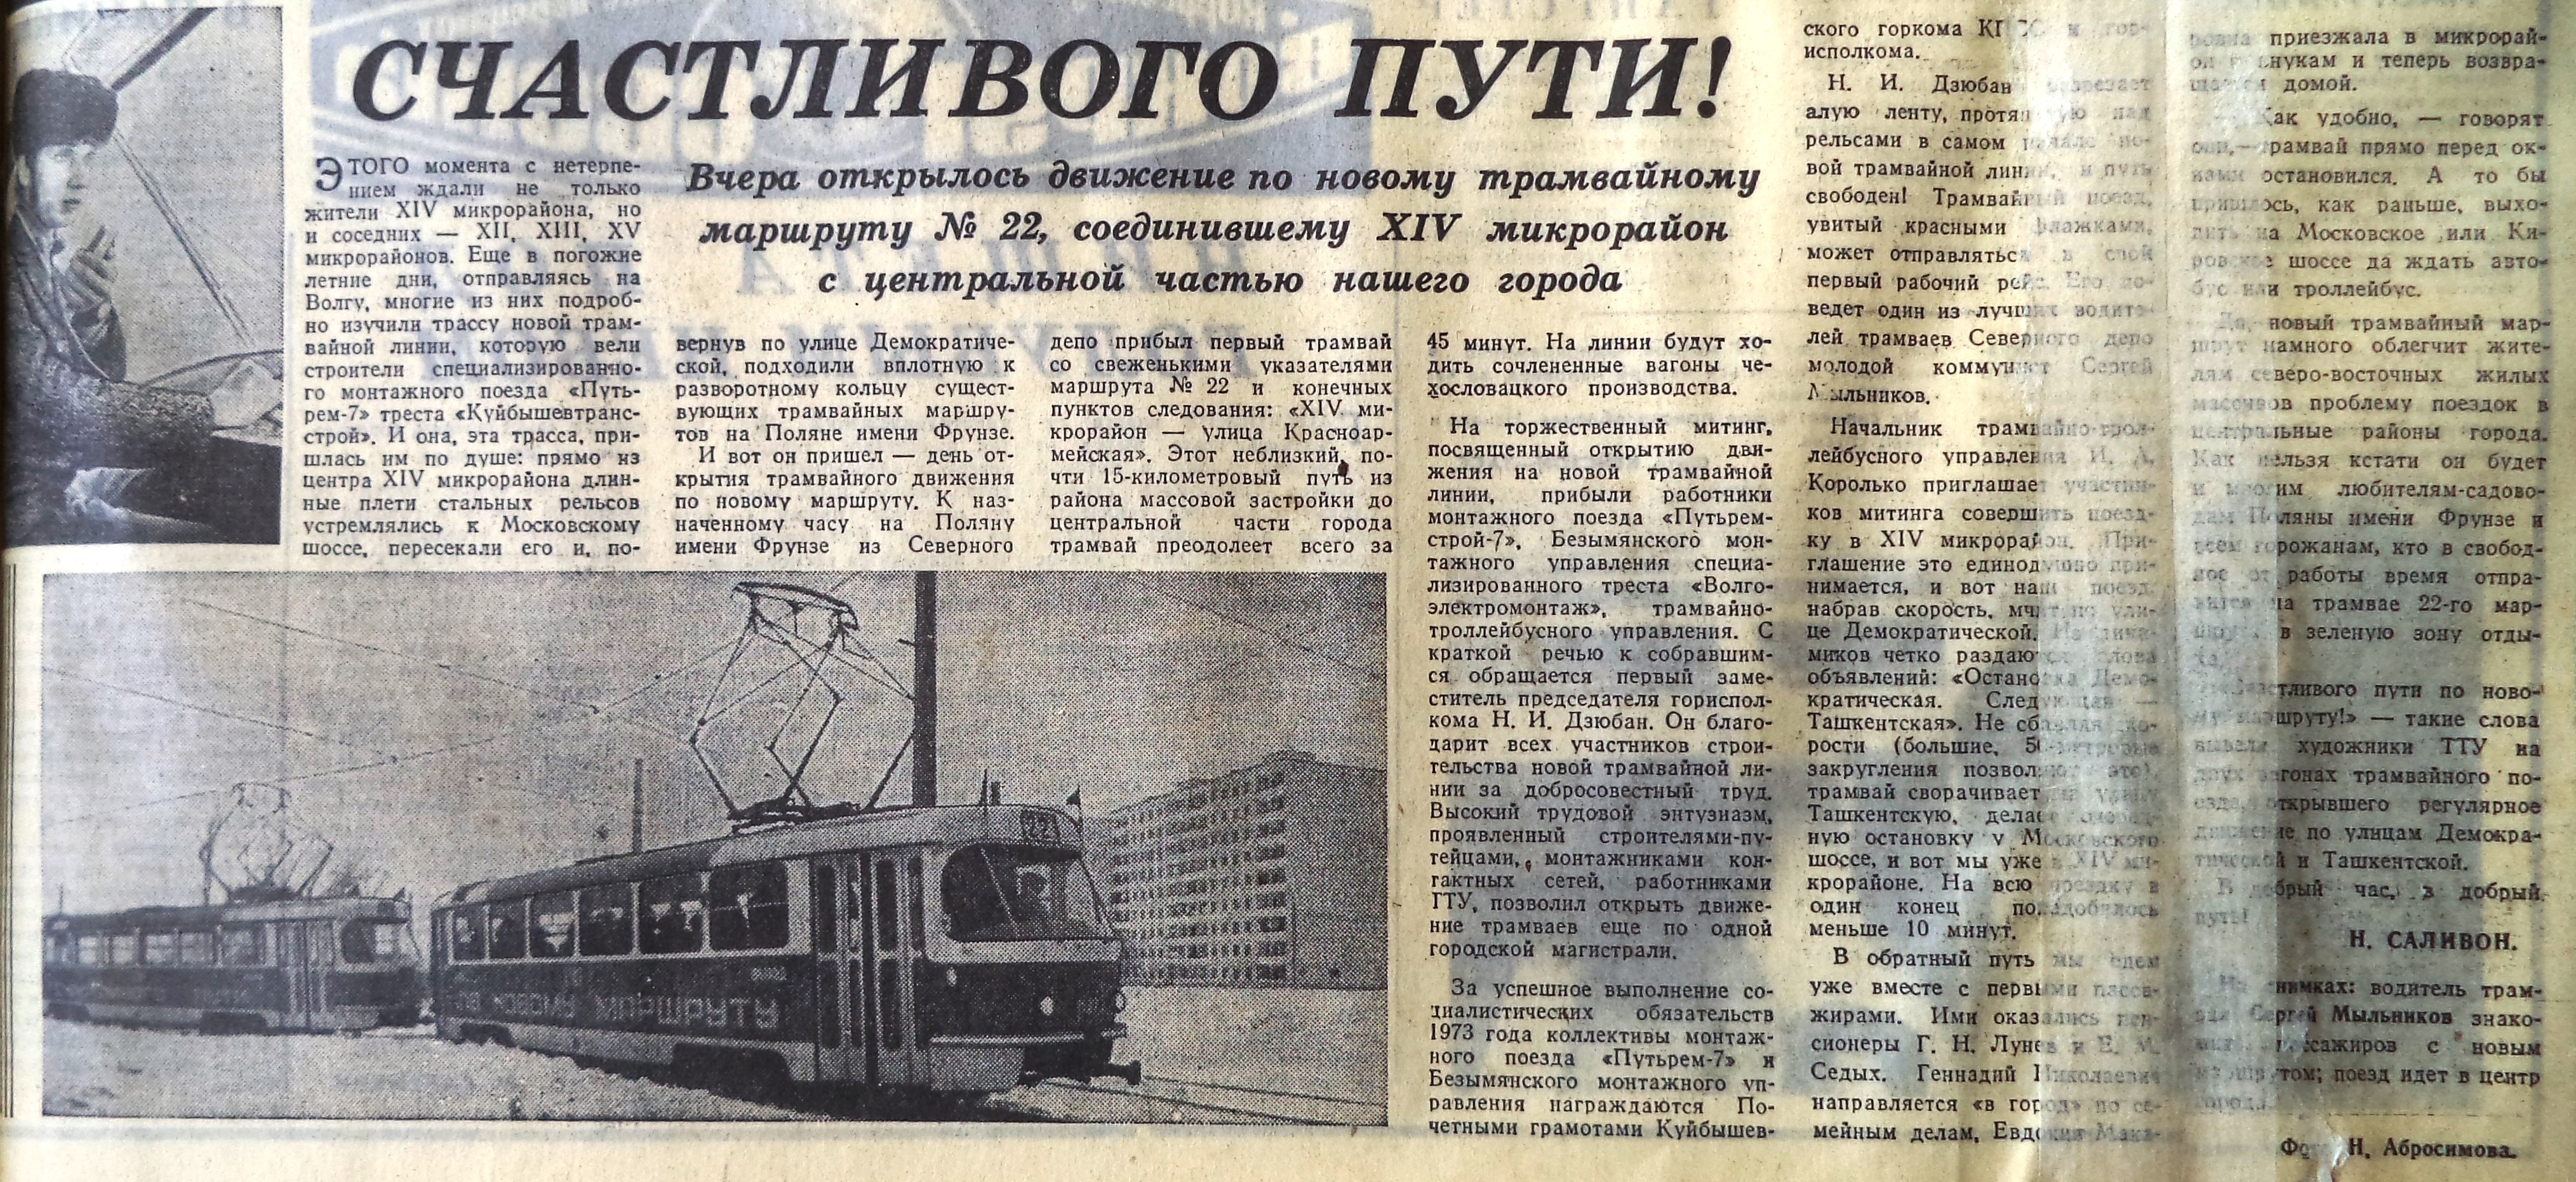 Трамвайчик текст. Газеты в трамвае. Трамвай 1973 года. Пуск первого трамвая. Царицынский трамвай в газетах.